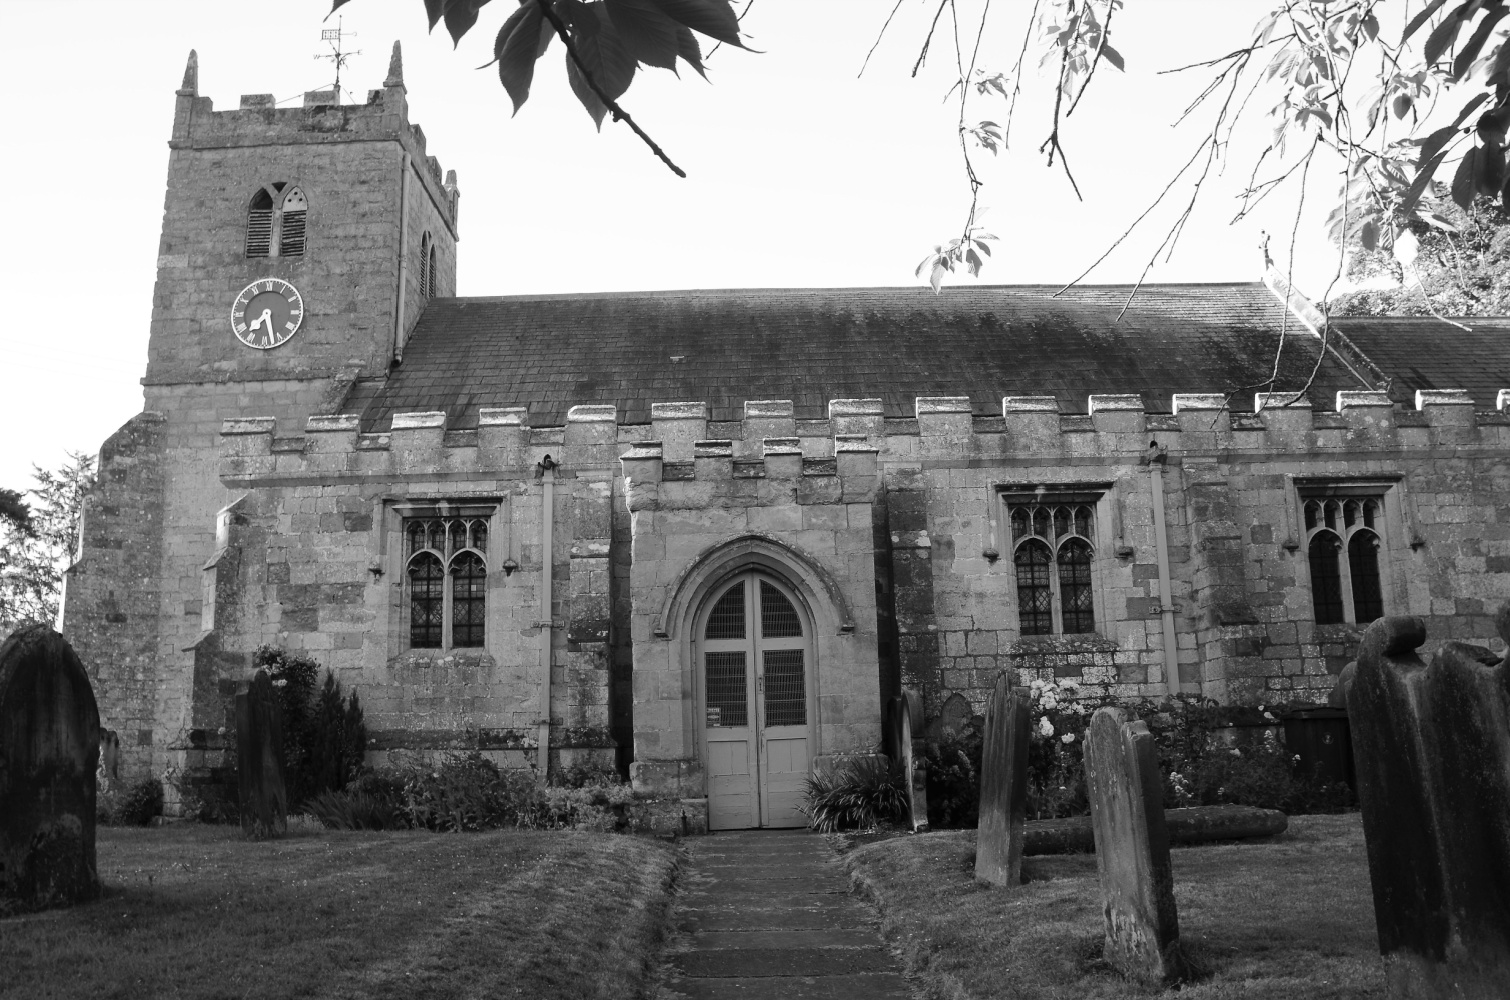 Image name kirby misperton church st laurence the 23 image from the post Kirby Misperton in Yorkshire.com.